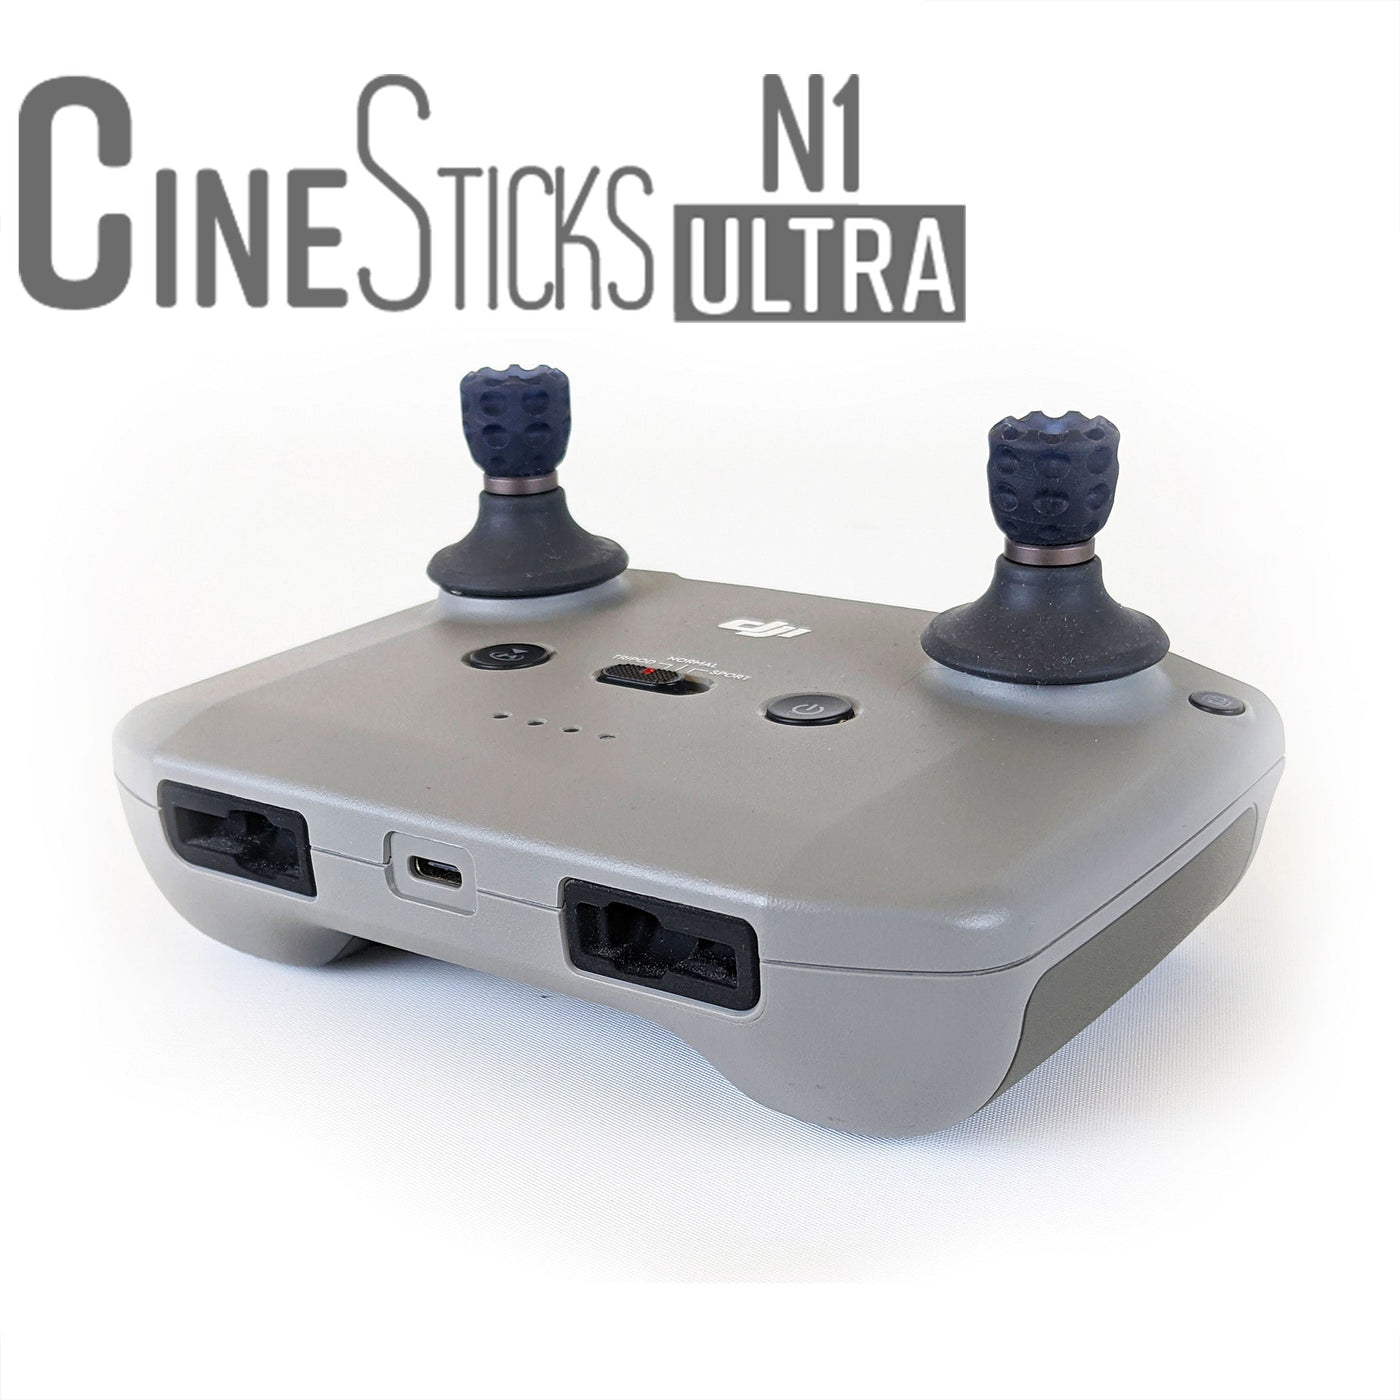 CineSticks N1 Ultra – USA